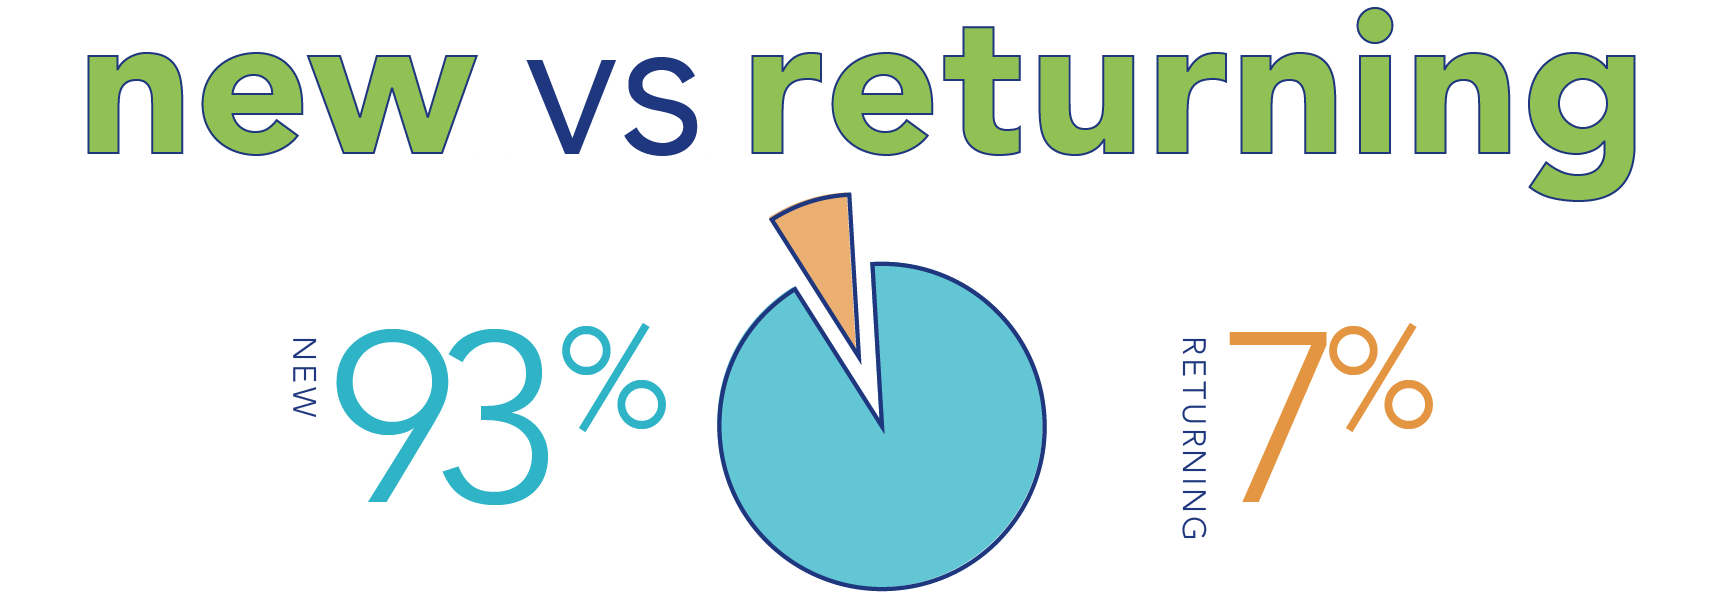 "new vs returning - new 93%, returning 7%" with circle chart